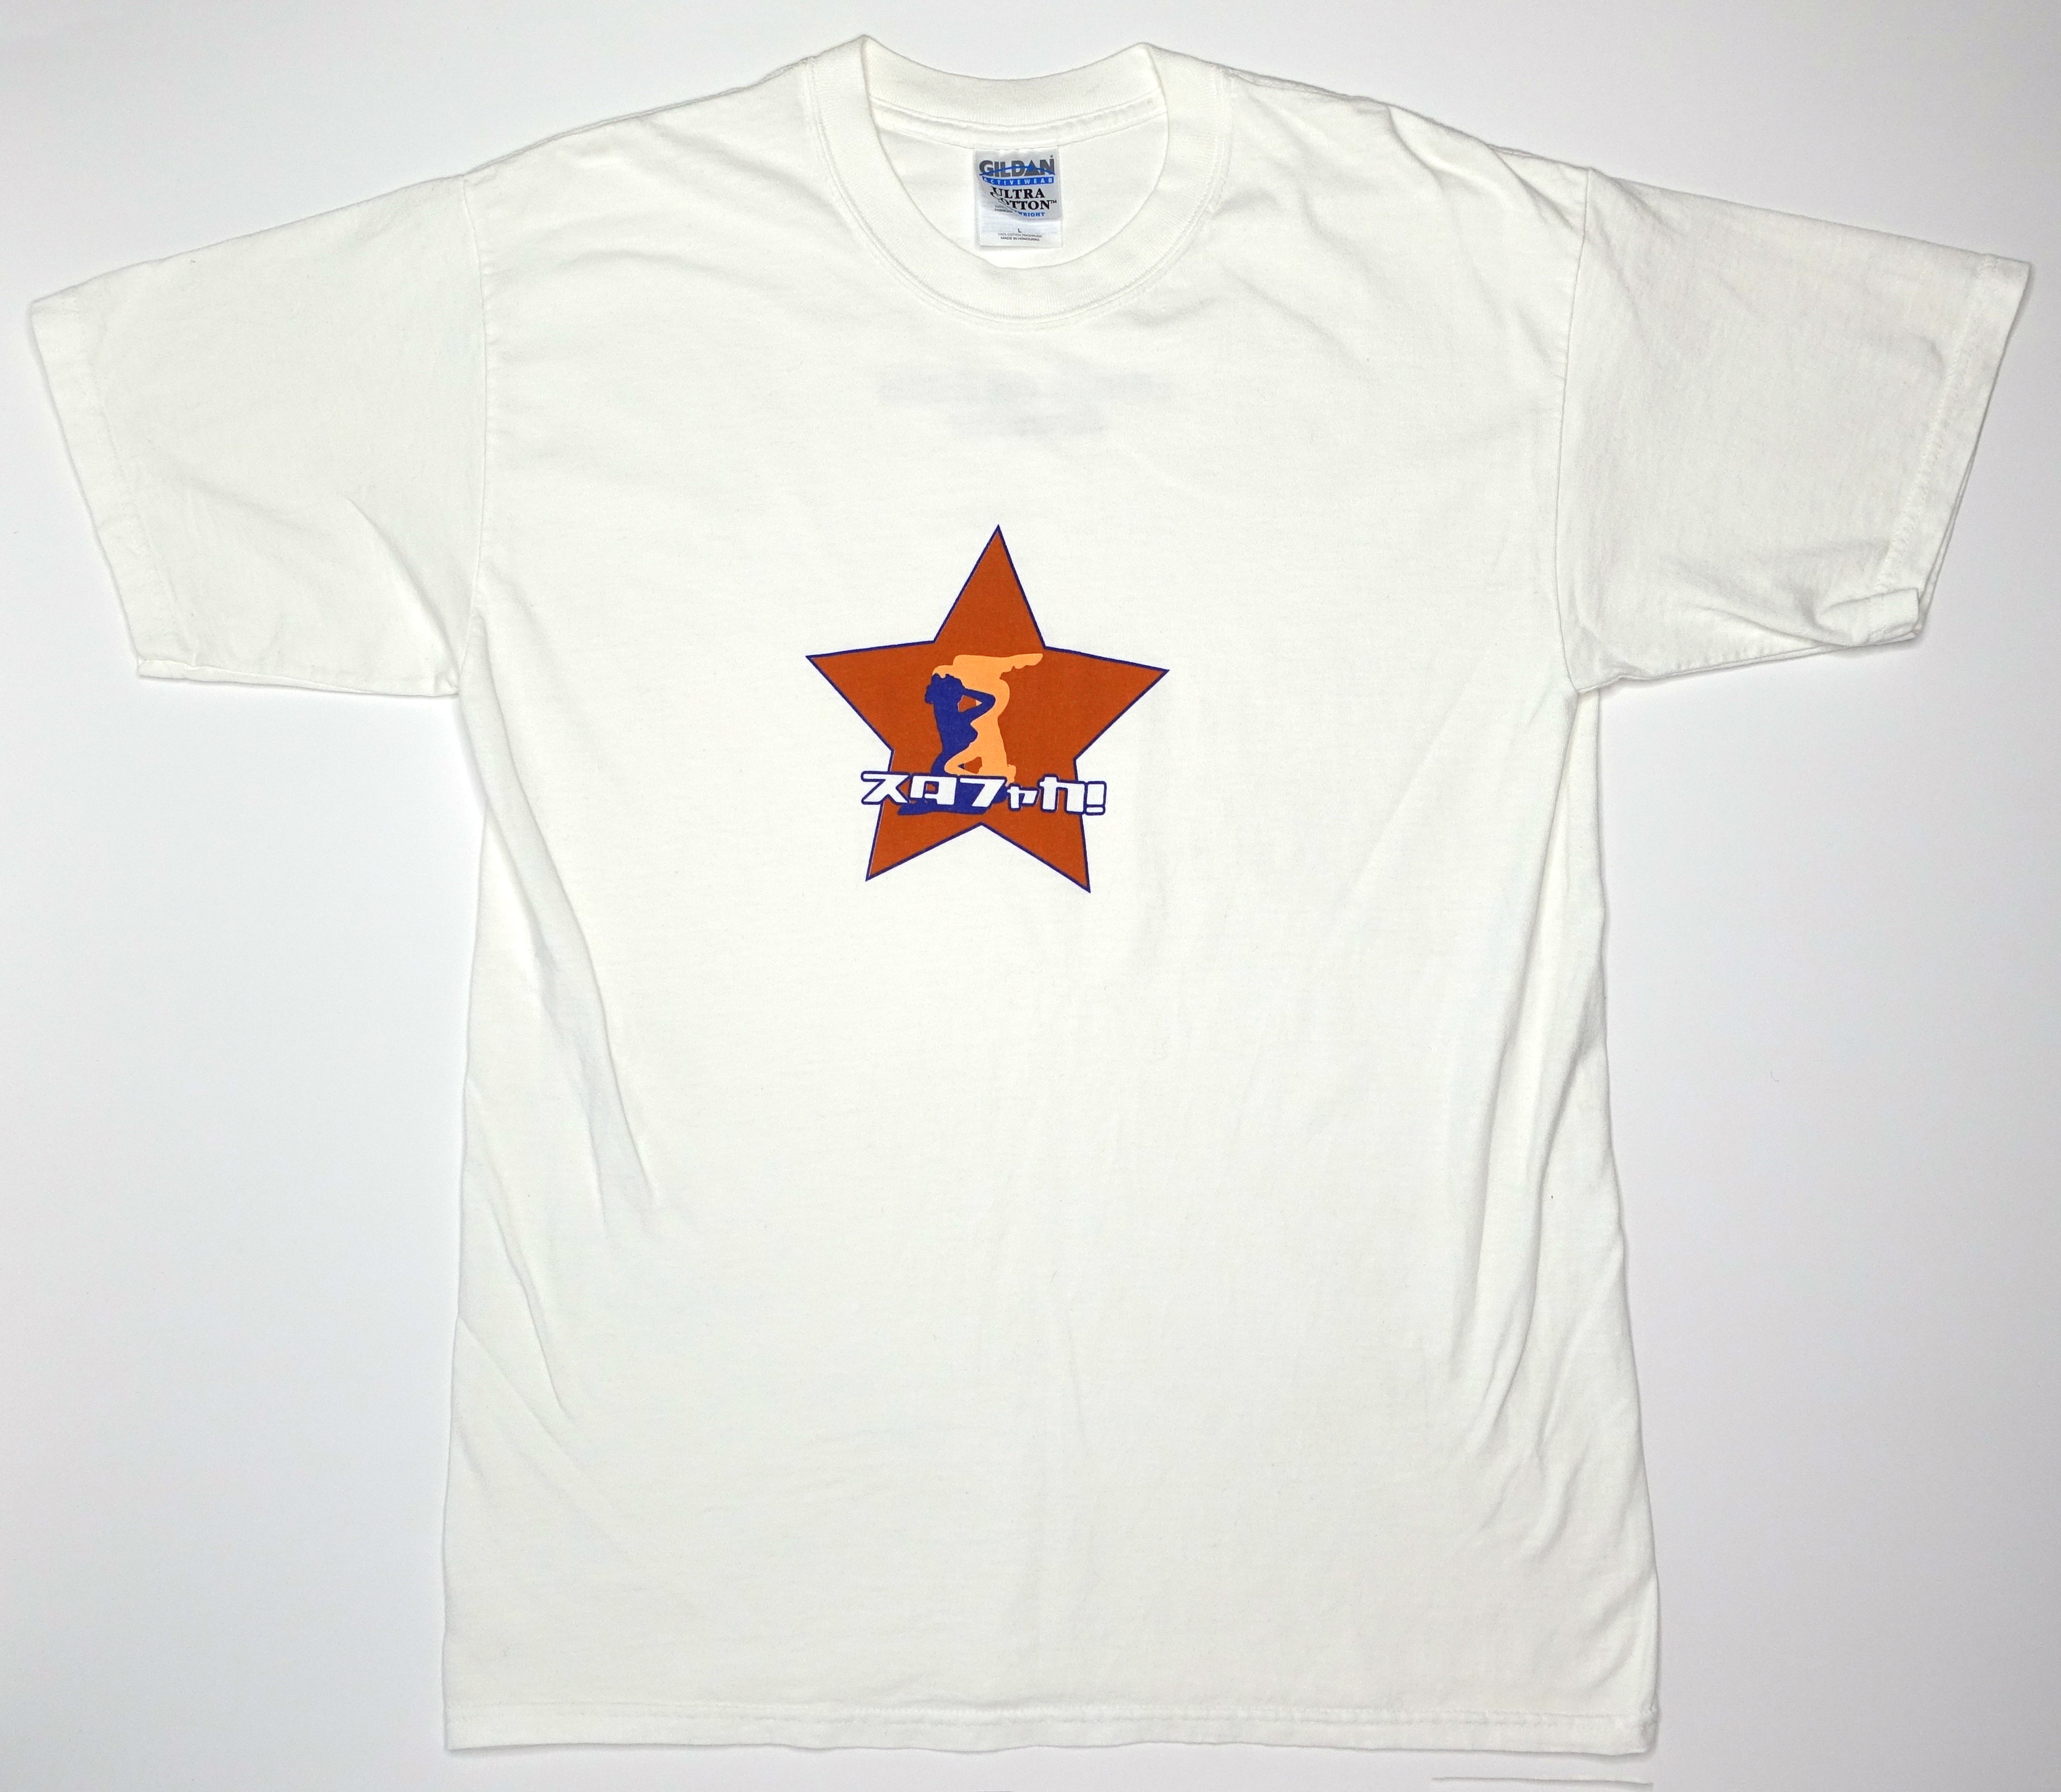 Lords Of Acid – Farstucker 2001 Tour Shirt Size Large